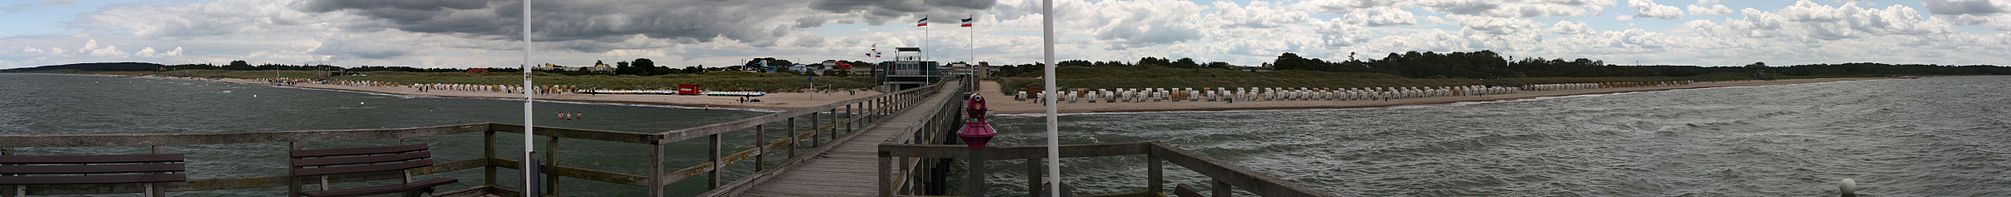 Panorama aus Richtung der Seebrücke